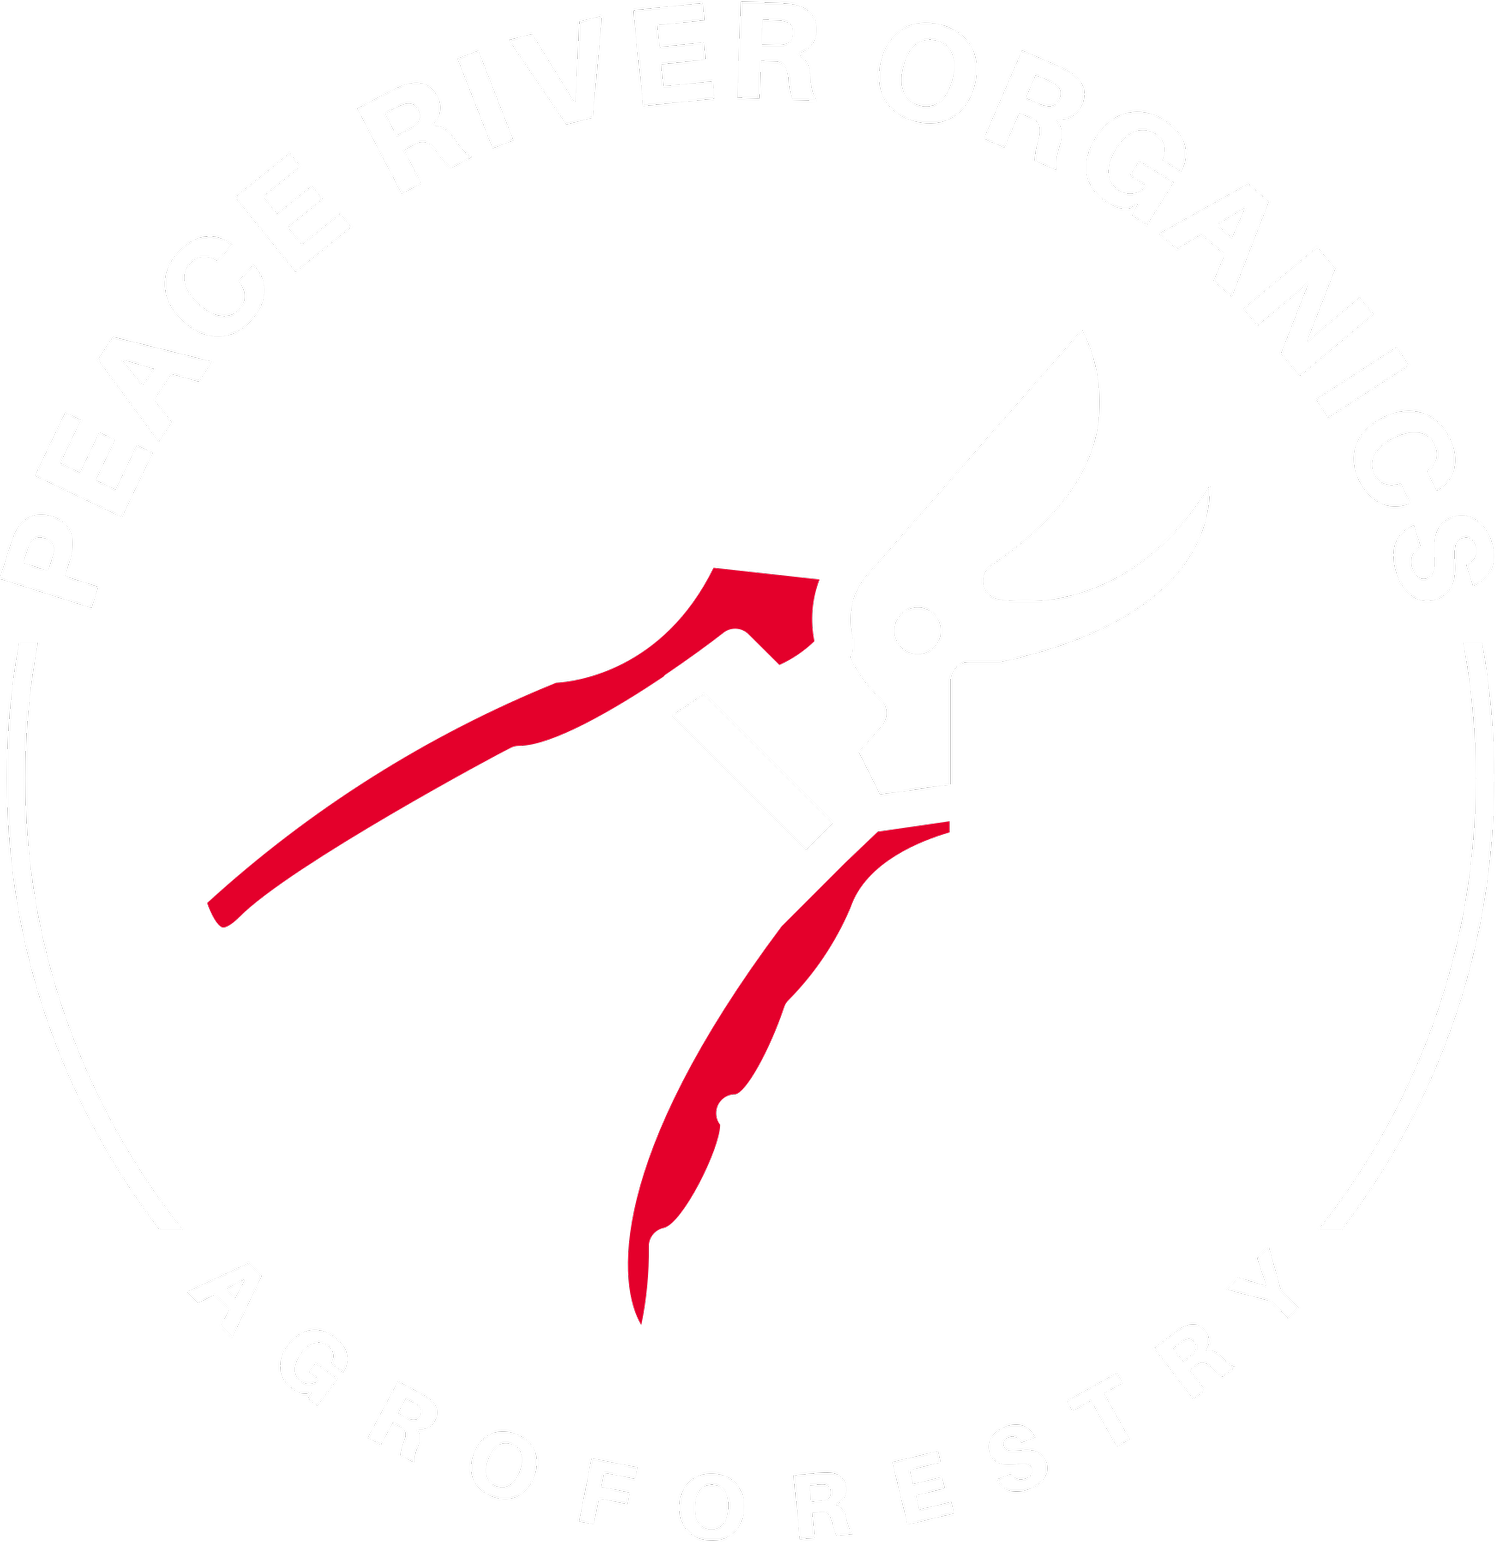 Peace River Organics